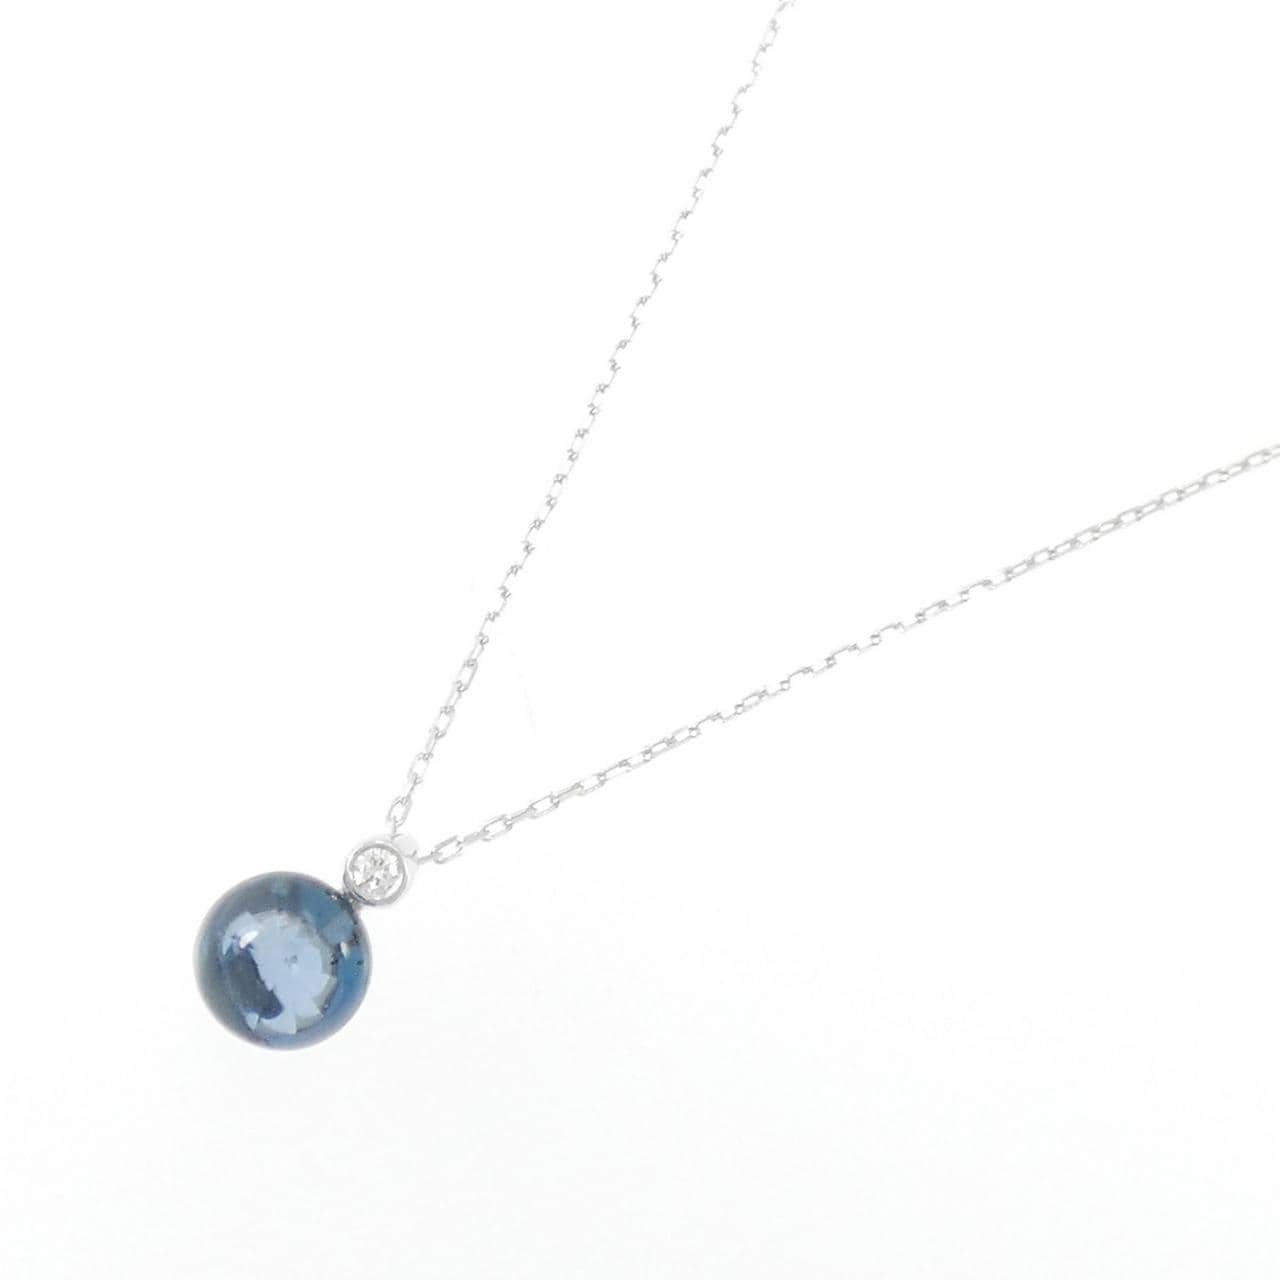 K18WG Blue Topaz Necklace 1.46CT